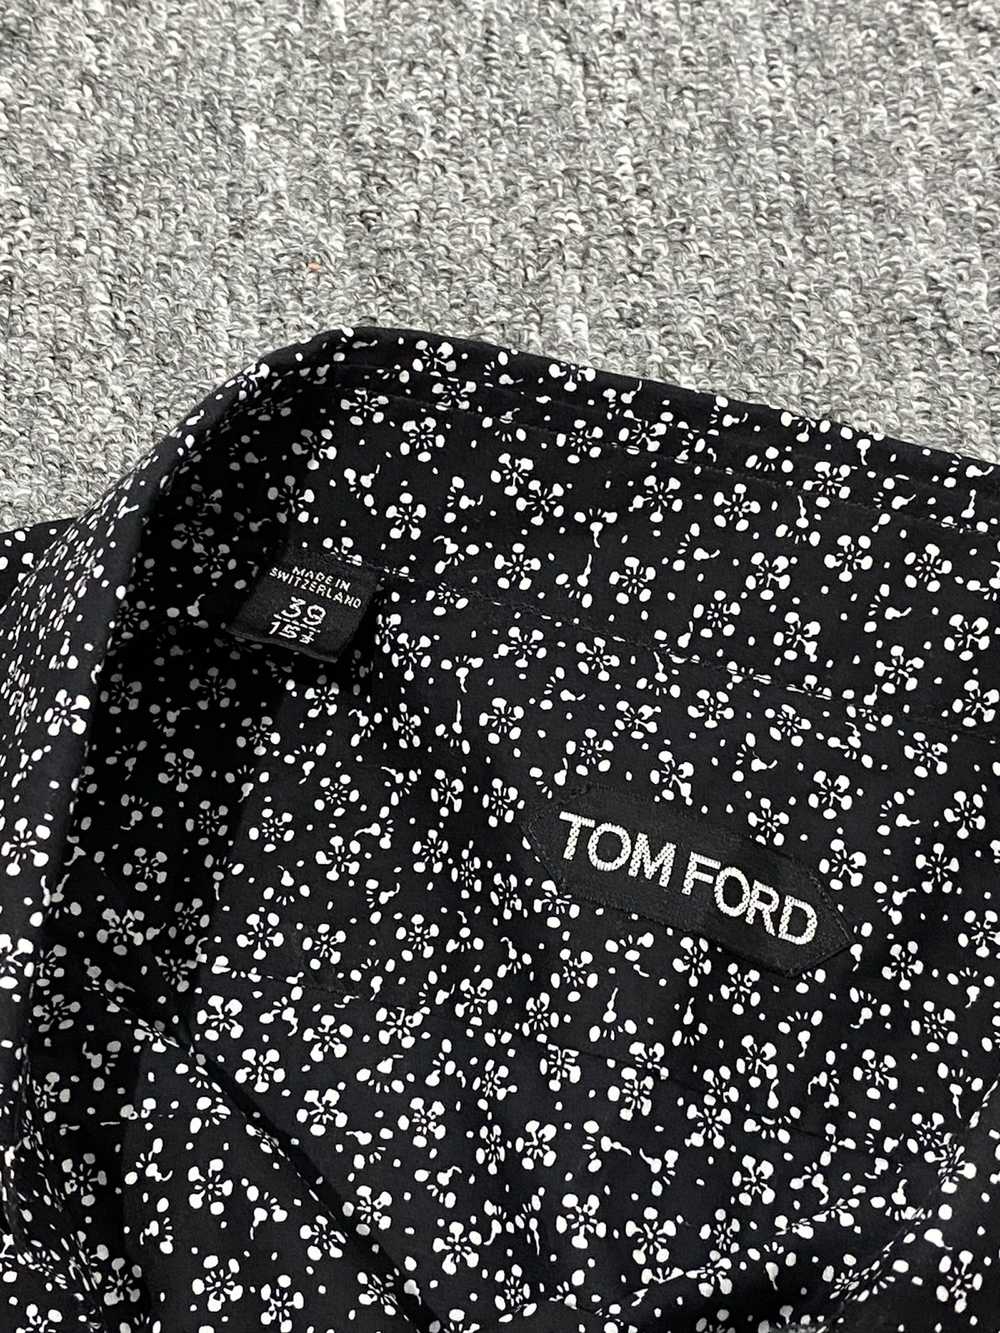 Tom Ford Tom Ford - Floral Printed Shirt - image 6